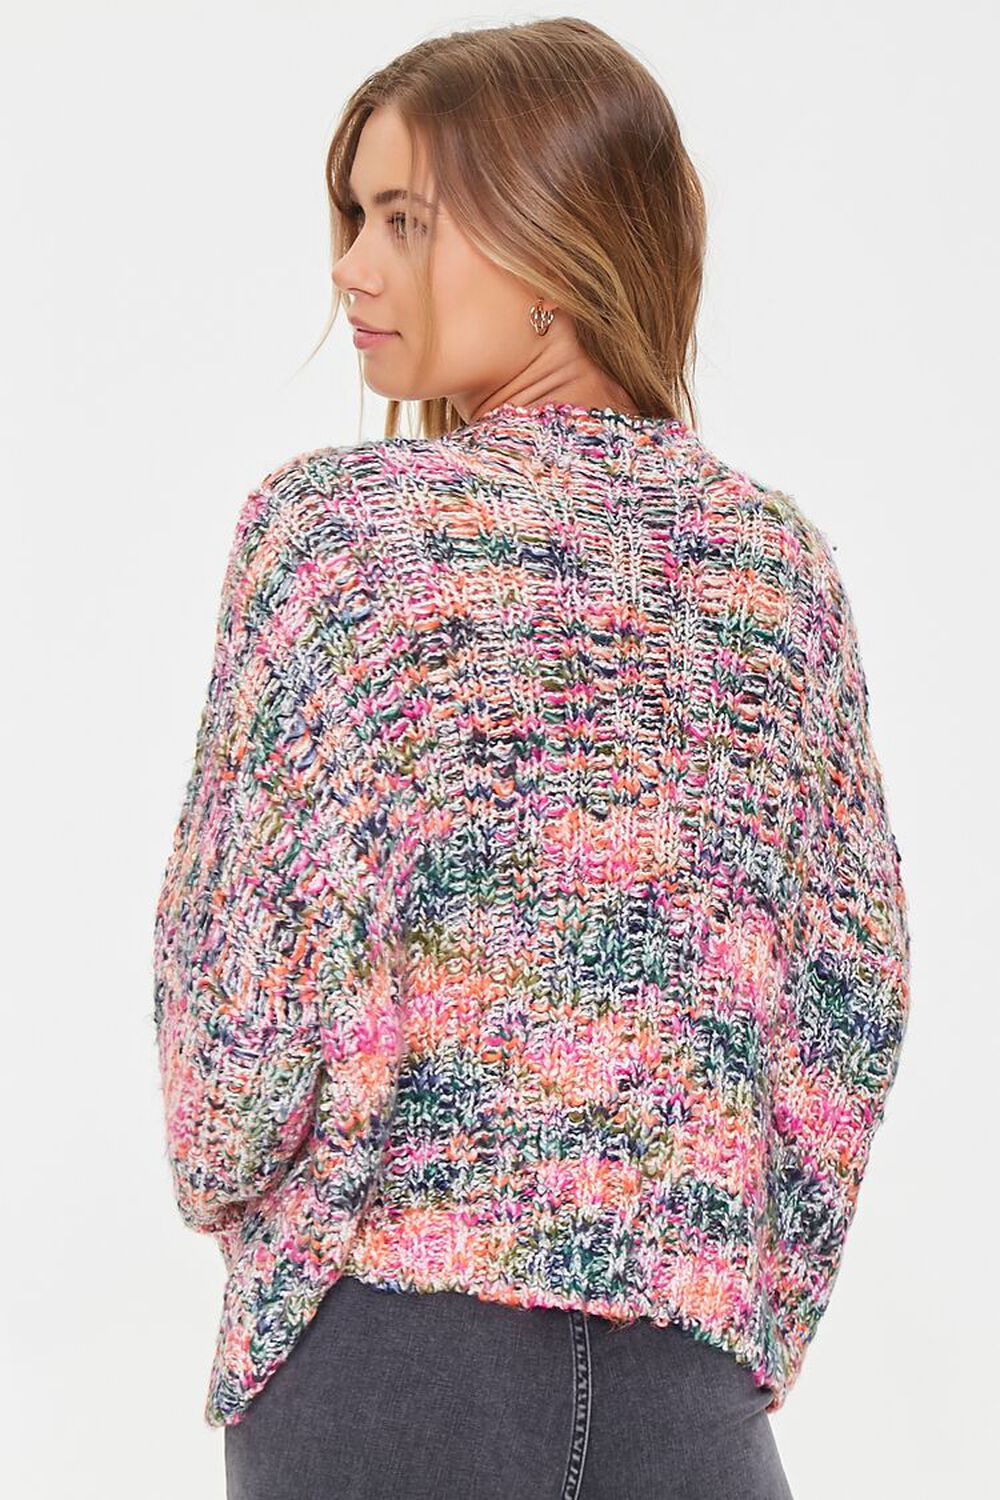 PINK/MULTI Multicolored Mock Neck Sweater, image 3